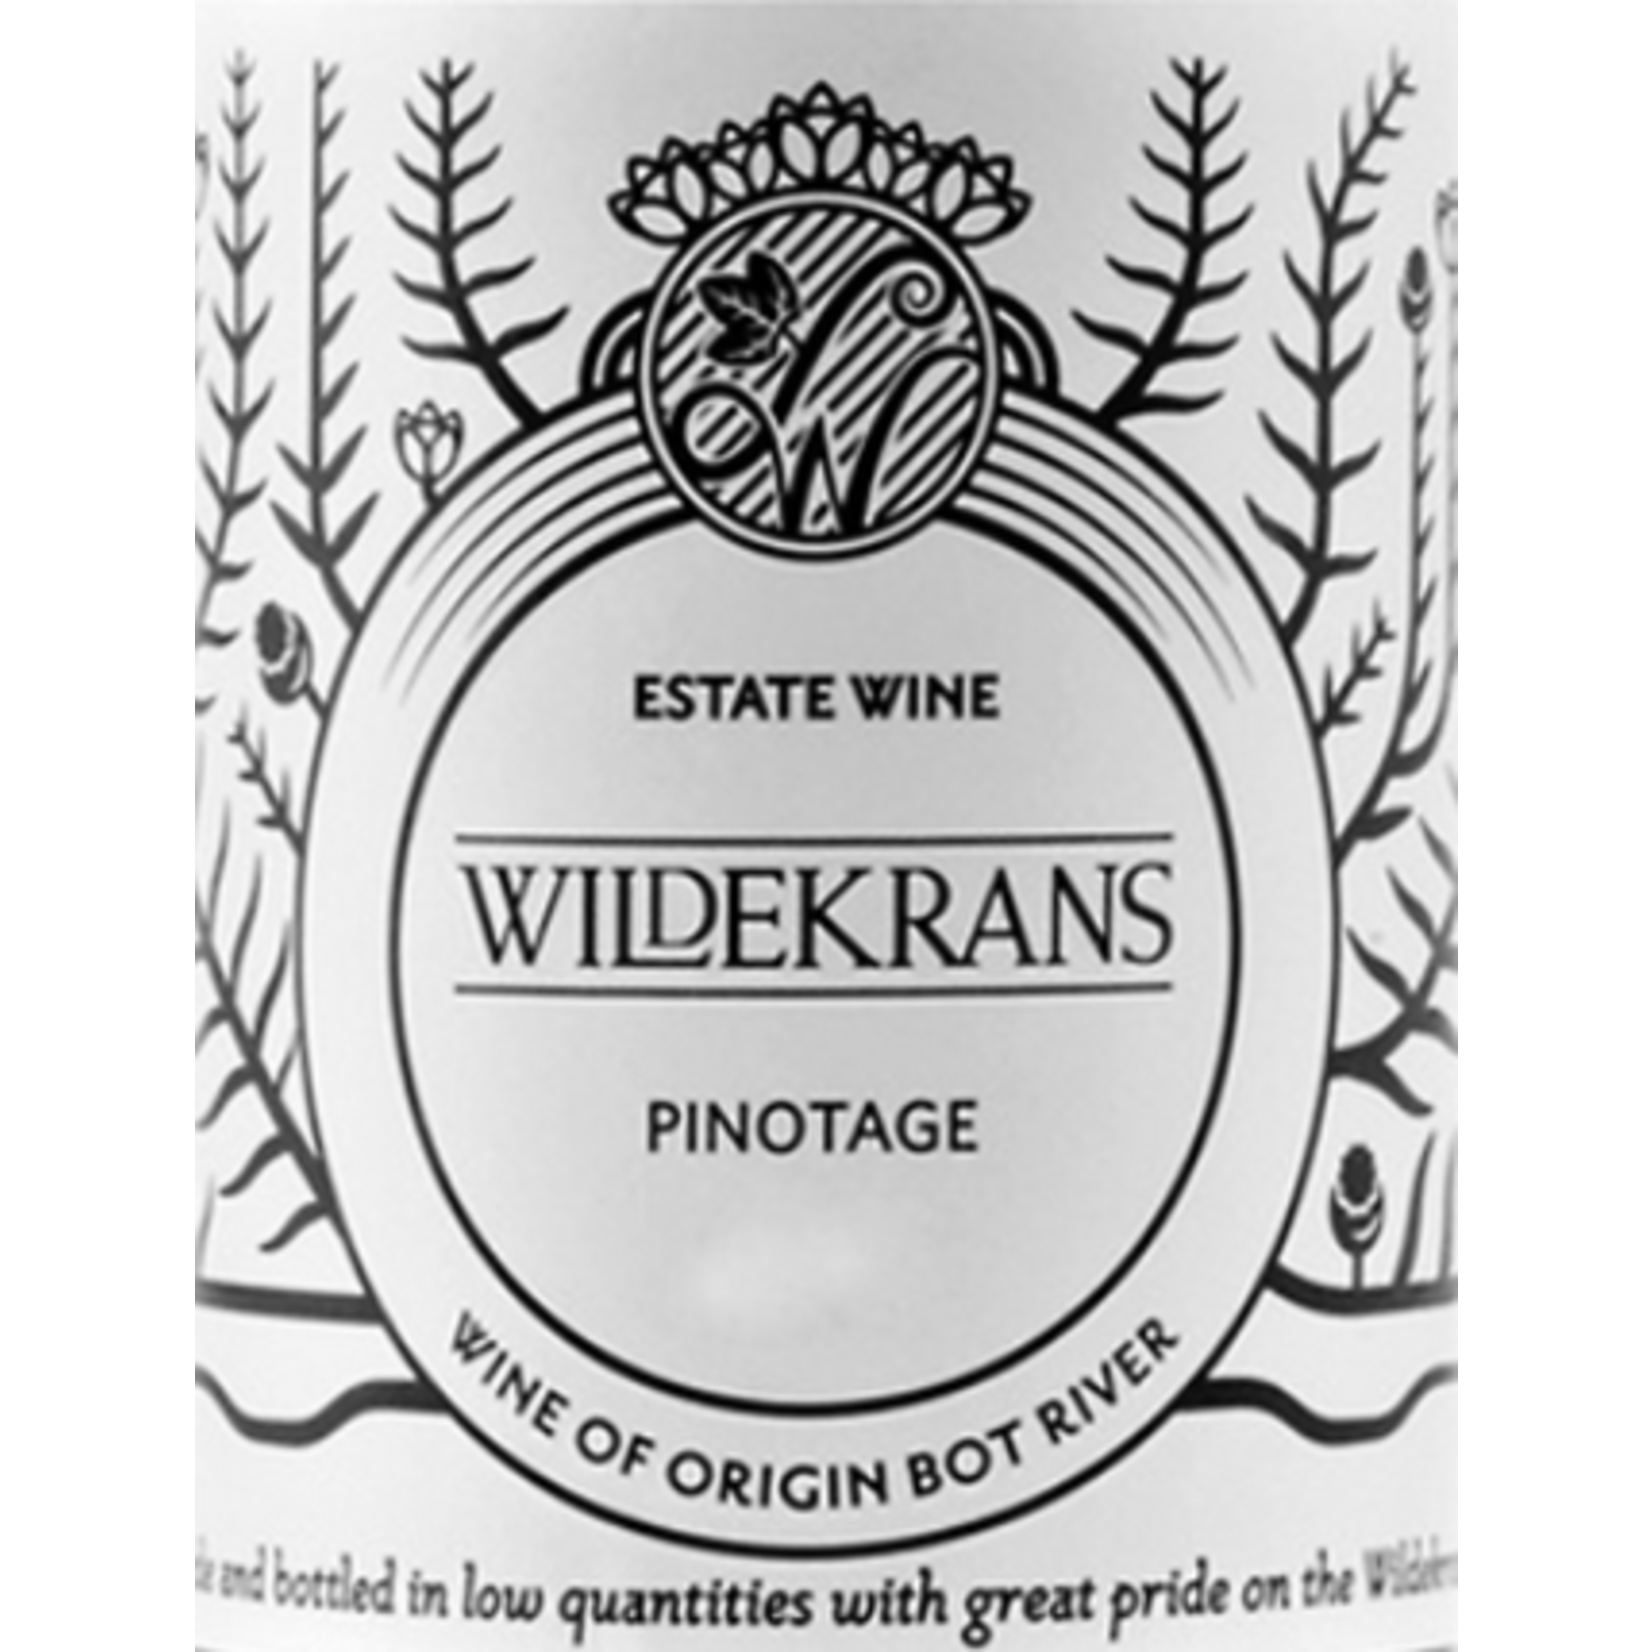 Wildekrans Wines Wildekrans Pinotage 2020 South Africa